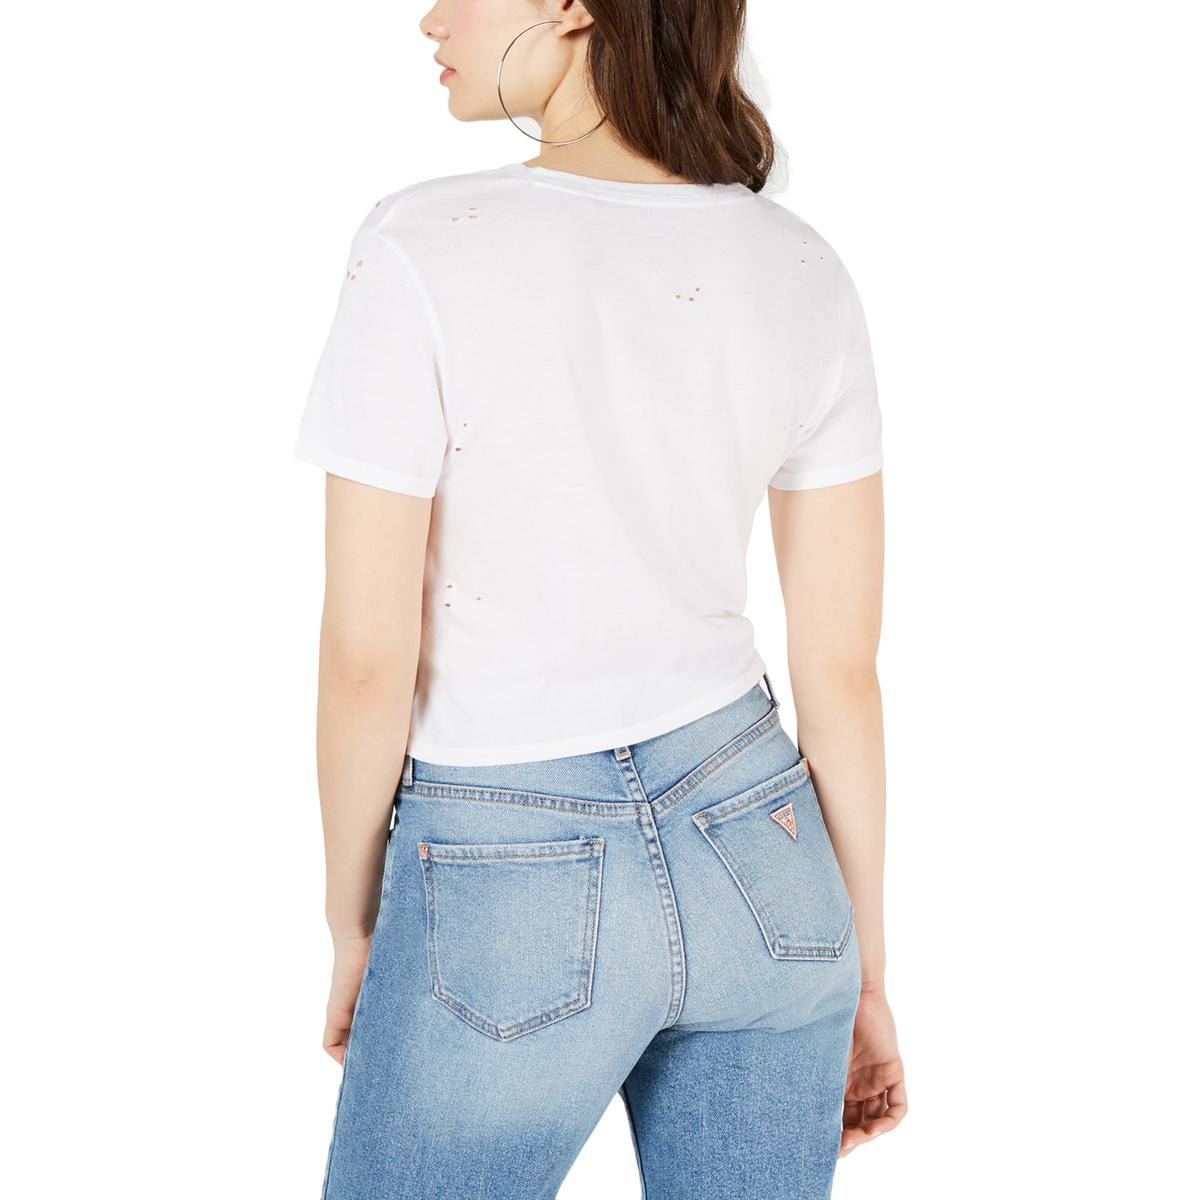 Guess Womens White Distressed Logo Crop T-Shirt Top L BHFO 9371 | eBay